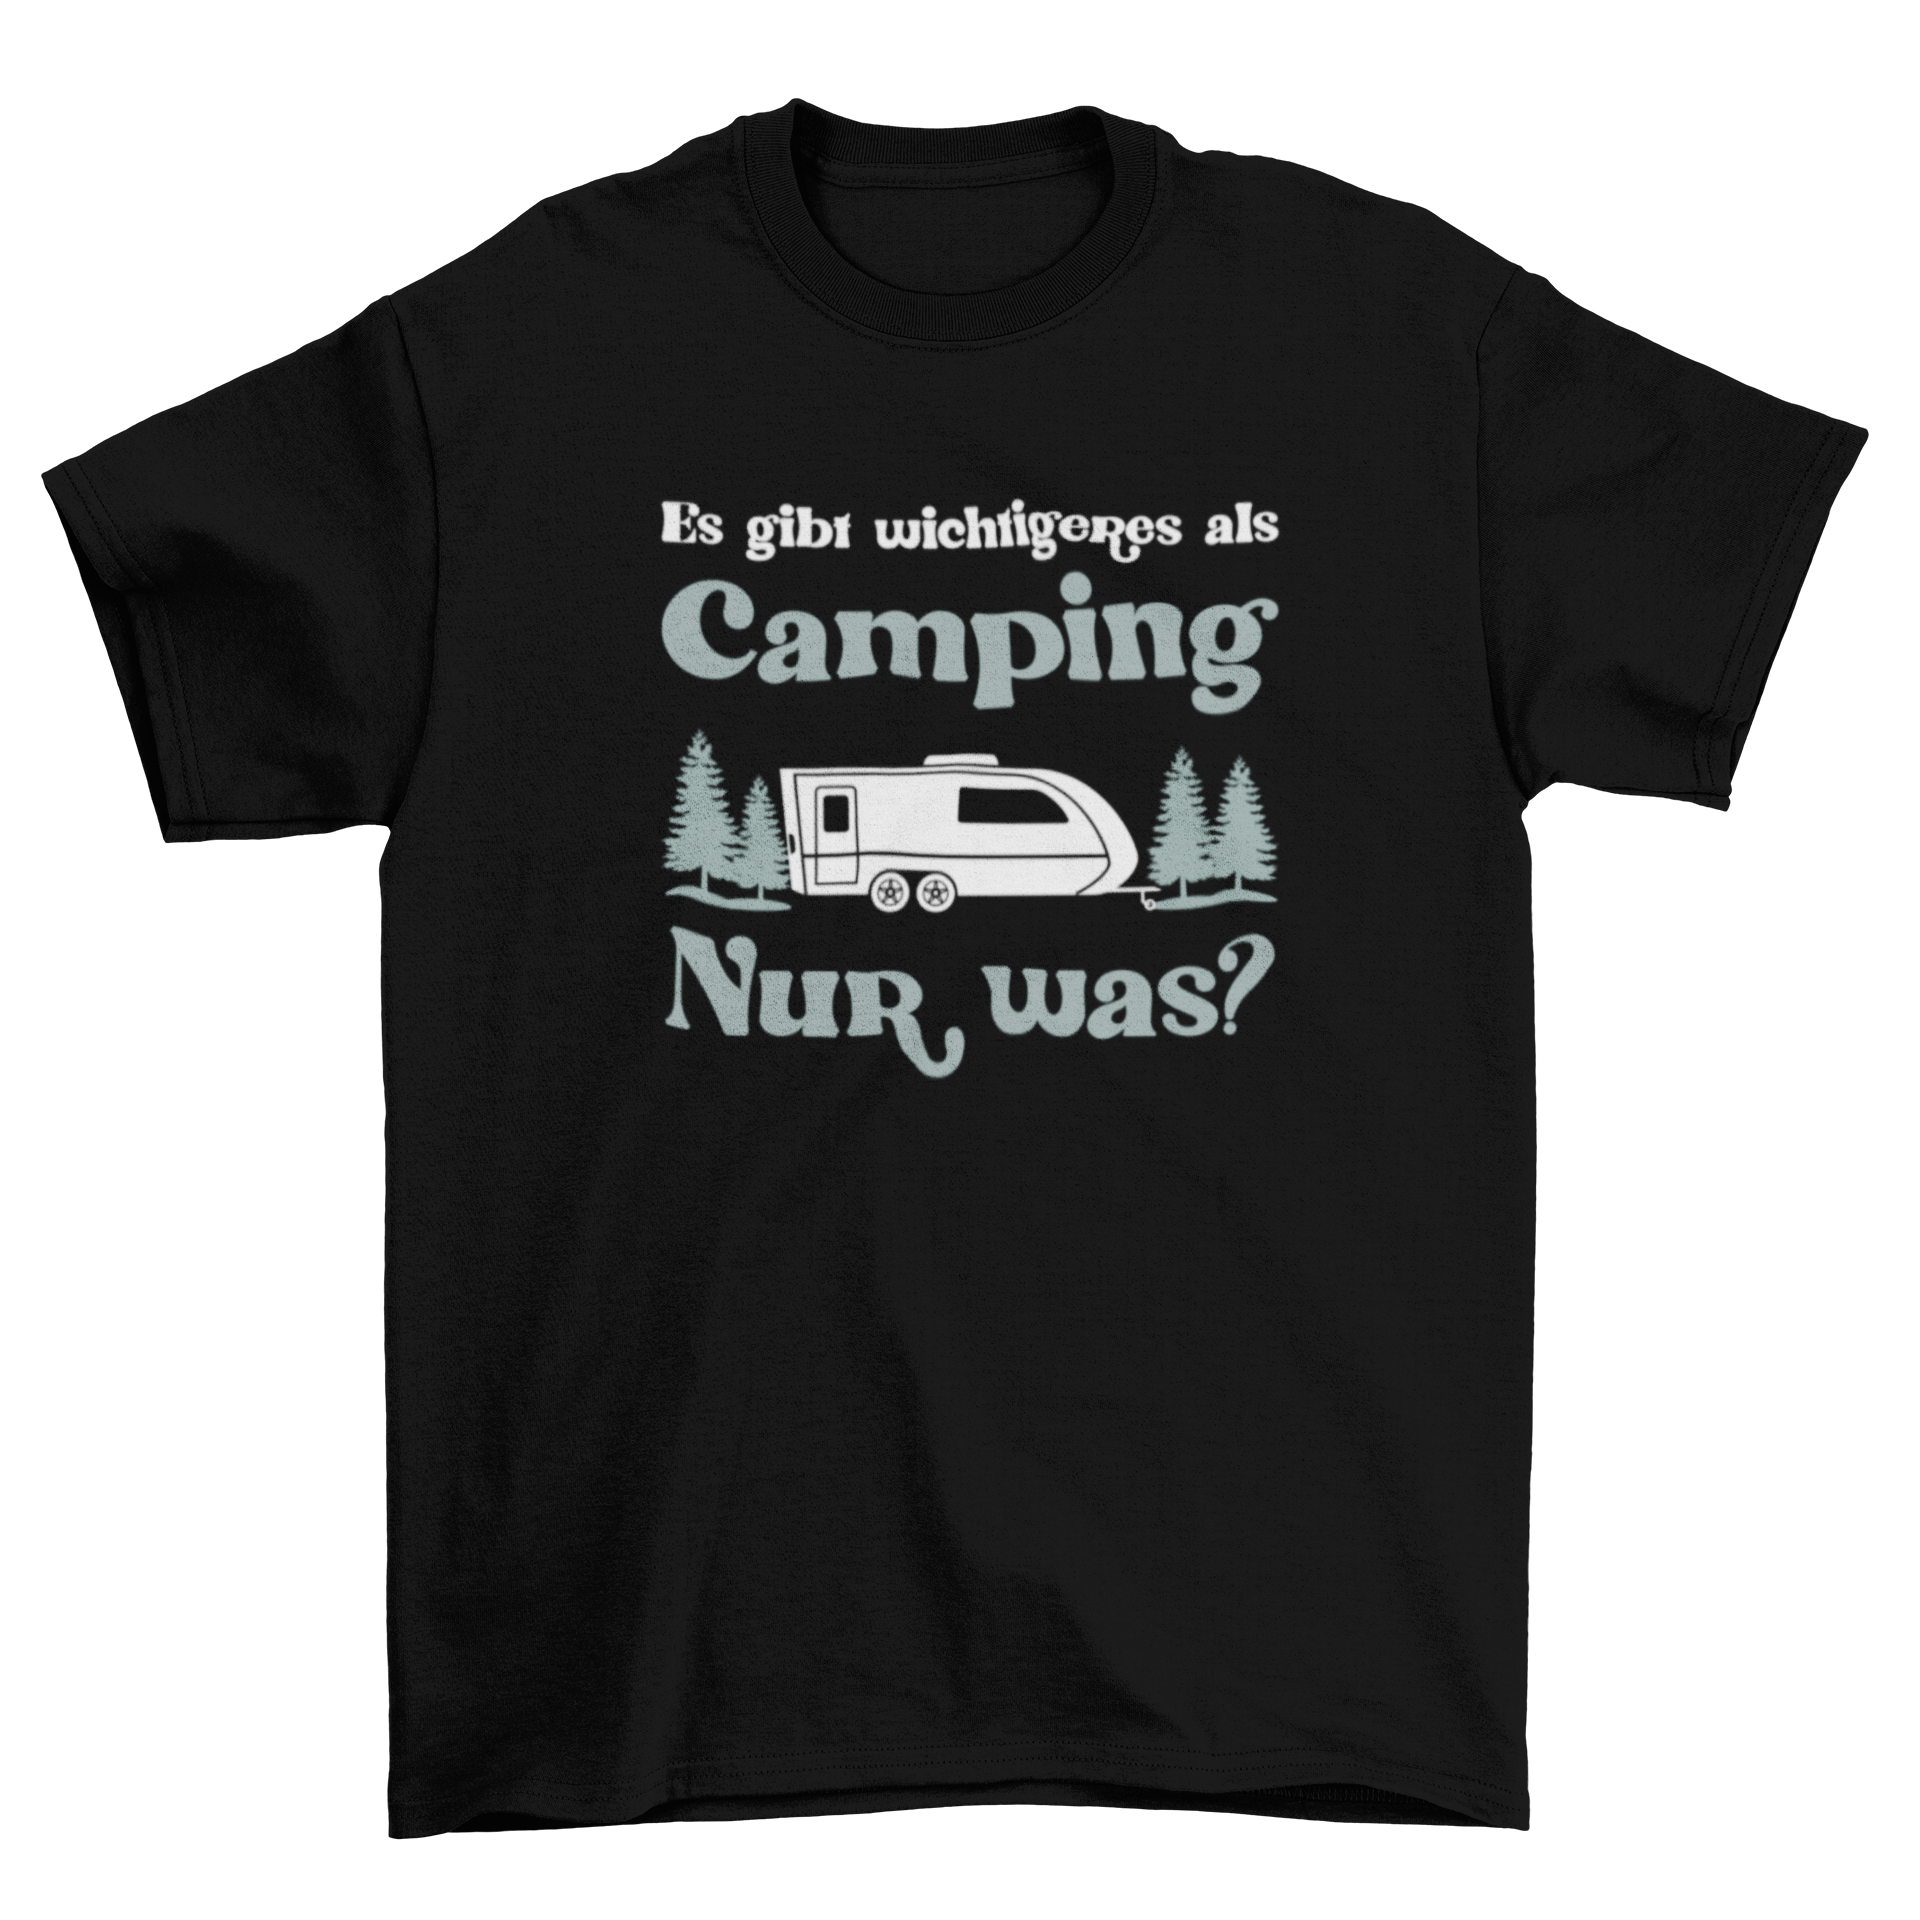 Es gibt wichtigeres als Camping T-Shirt